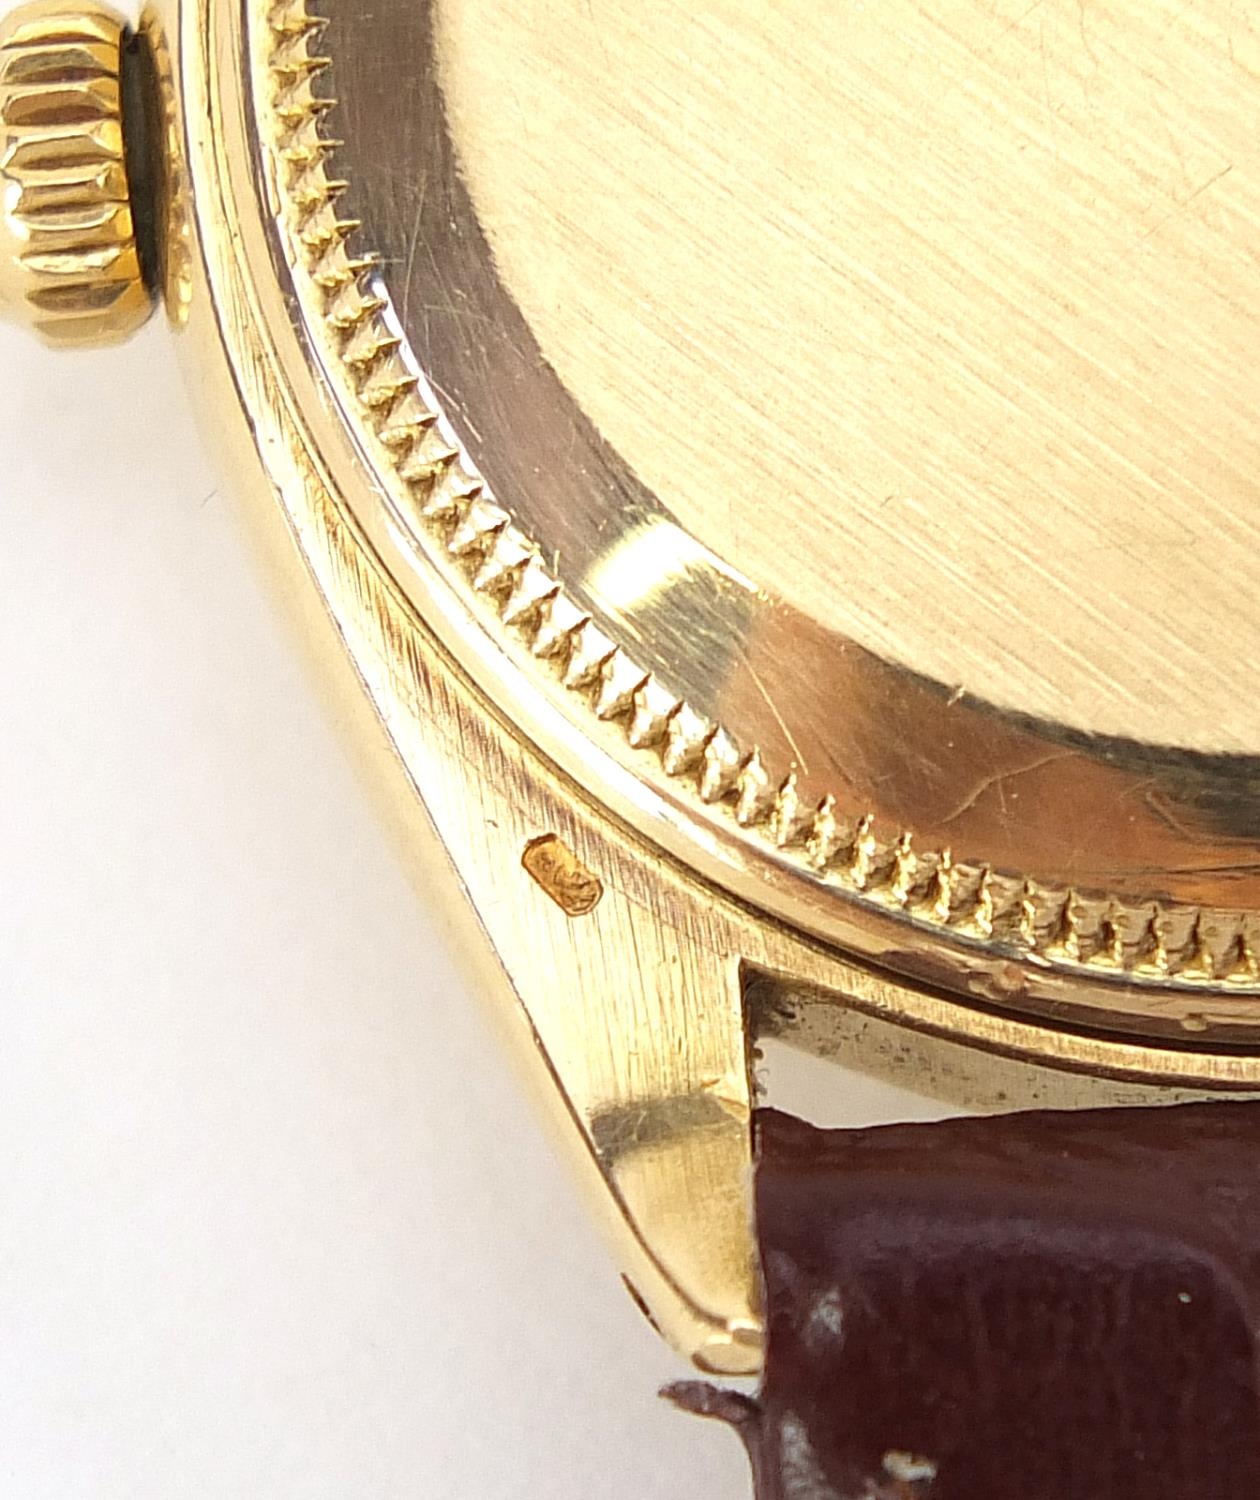 Rolex, gentlemen's gold Rolex Oyster chronometer wristwatch, 33mm in diameter, total weight 50.0g - Image 5 of 6